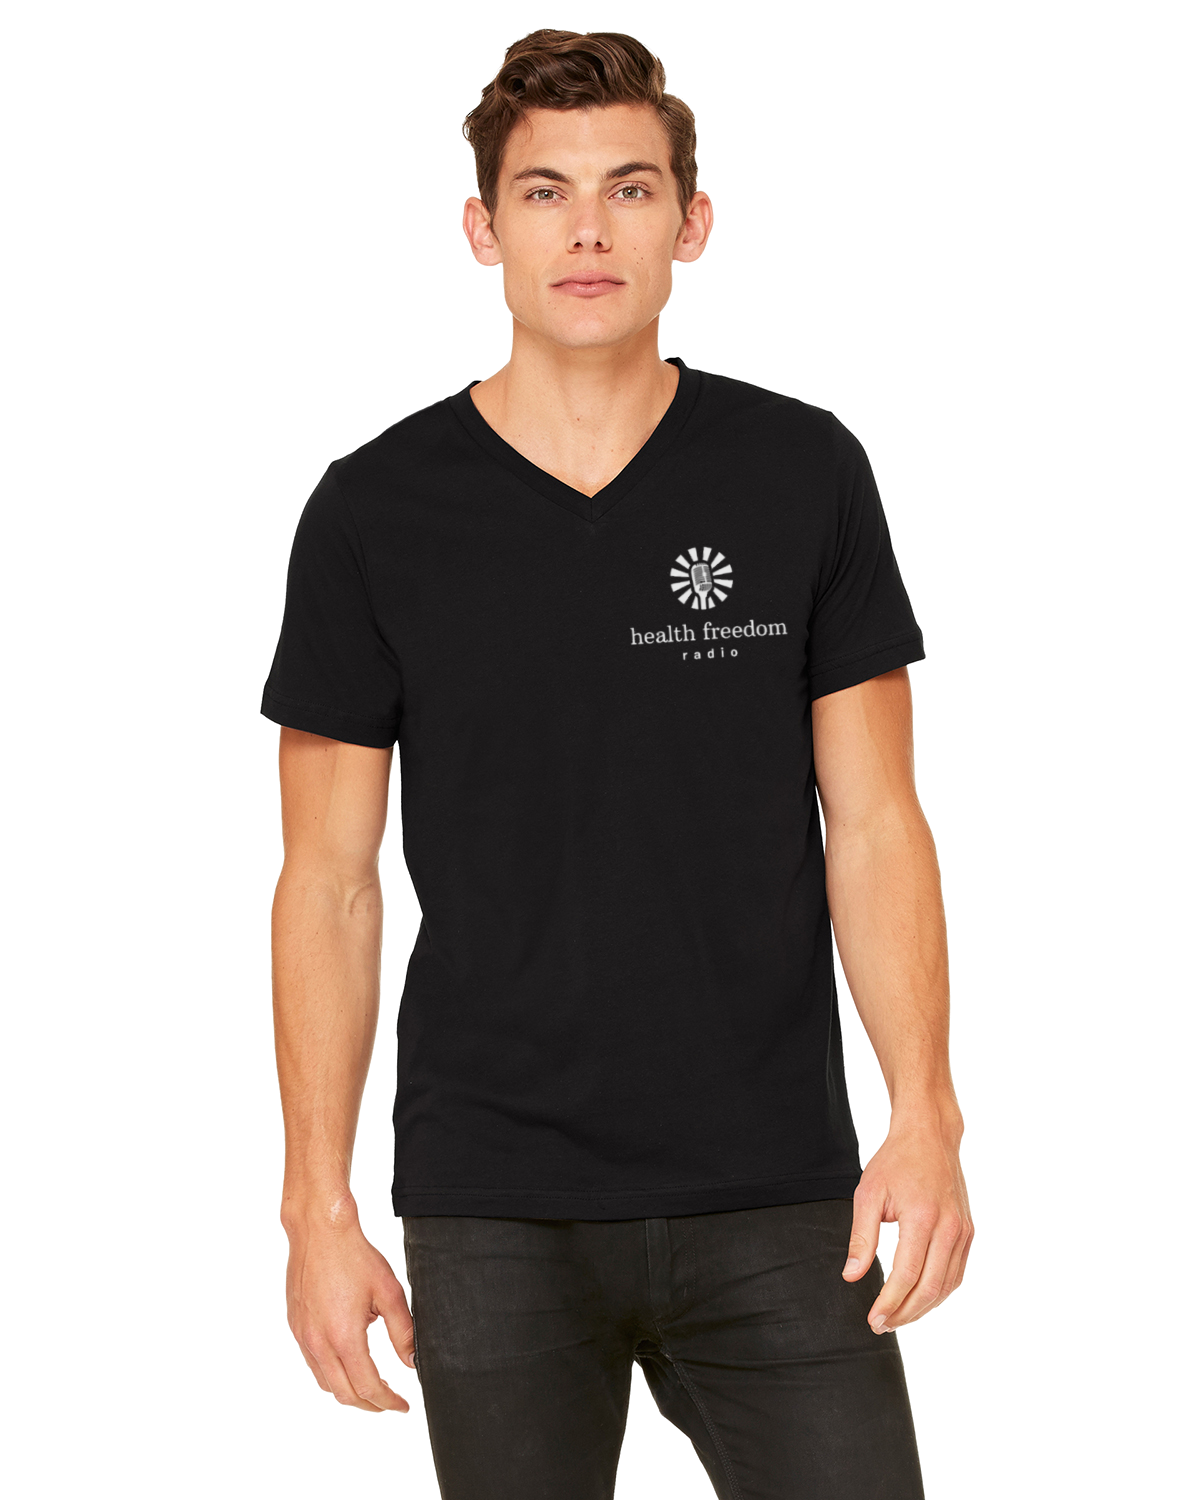 Unisex Short-Sleeve Cotton V-Neck T-Shirt